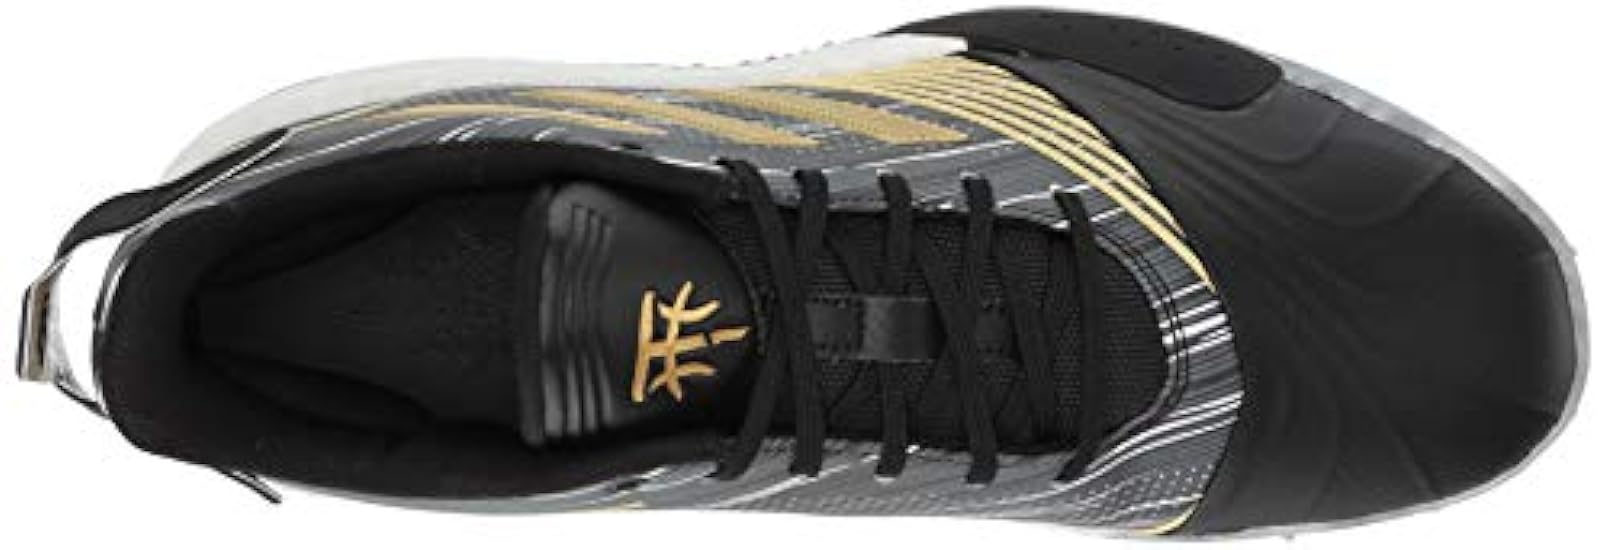 adidas Scarpe da Basket da Uomo Tmac Millennium, Nero Oro Metallizzato Dark Grey Heather Solid Grey, 41 1/3 EU 785756434